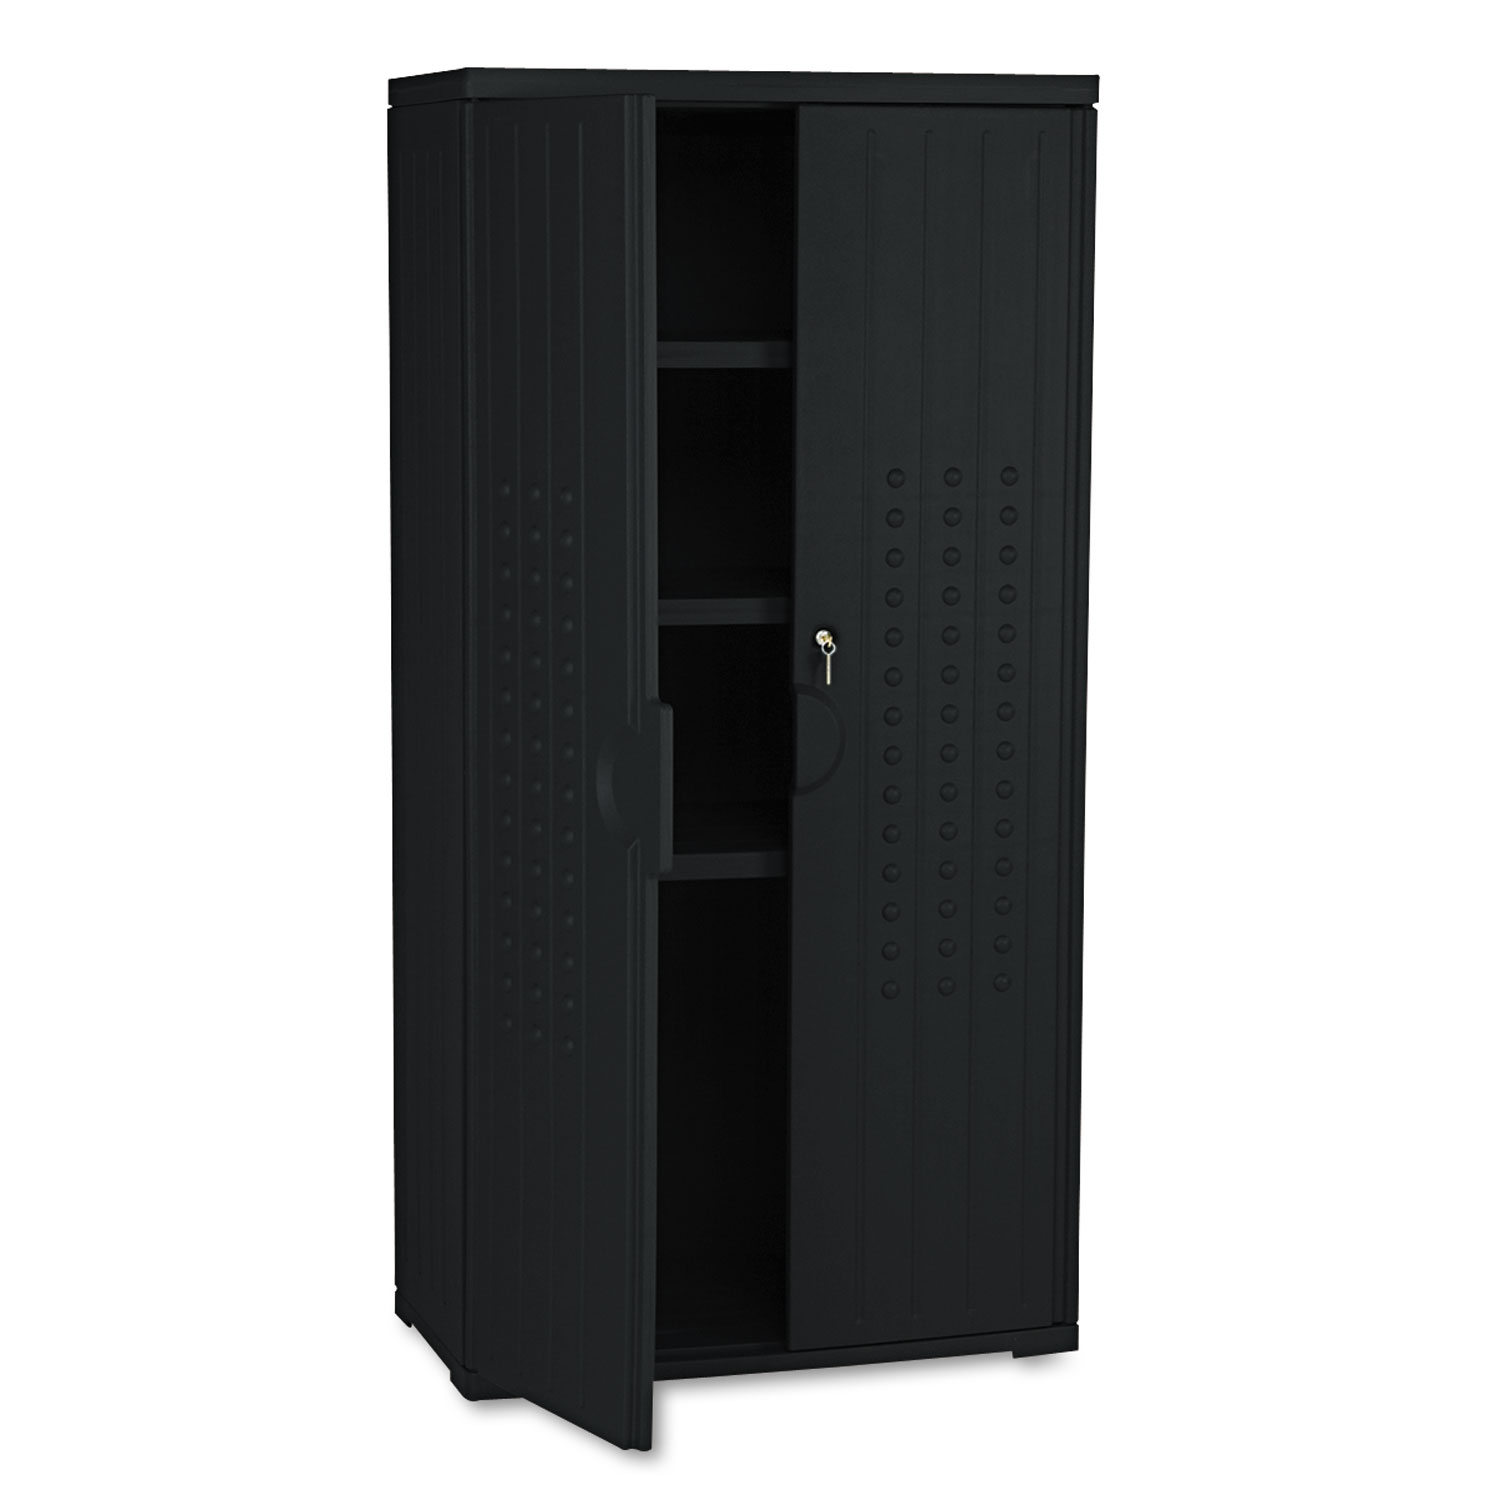  Iceberg 92551 OfficeWorks Resin Storage Cabinet, 33w x 18d x 66h, Black (ICE92551) 